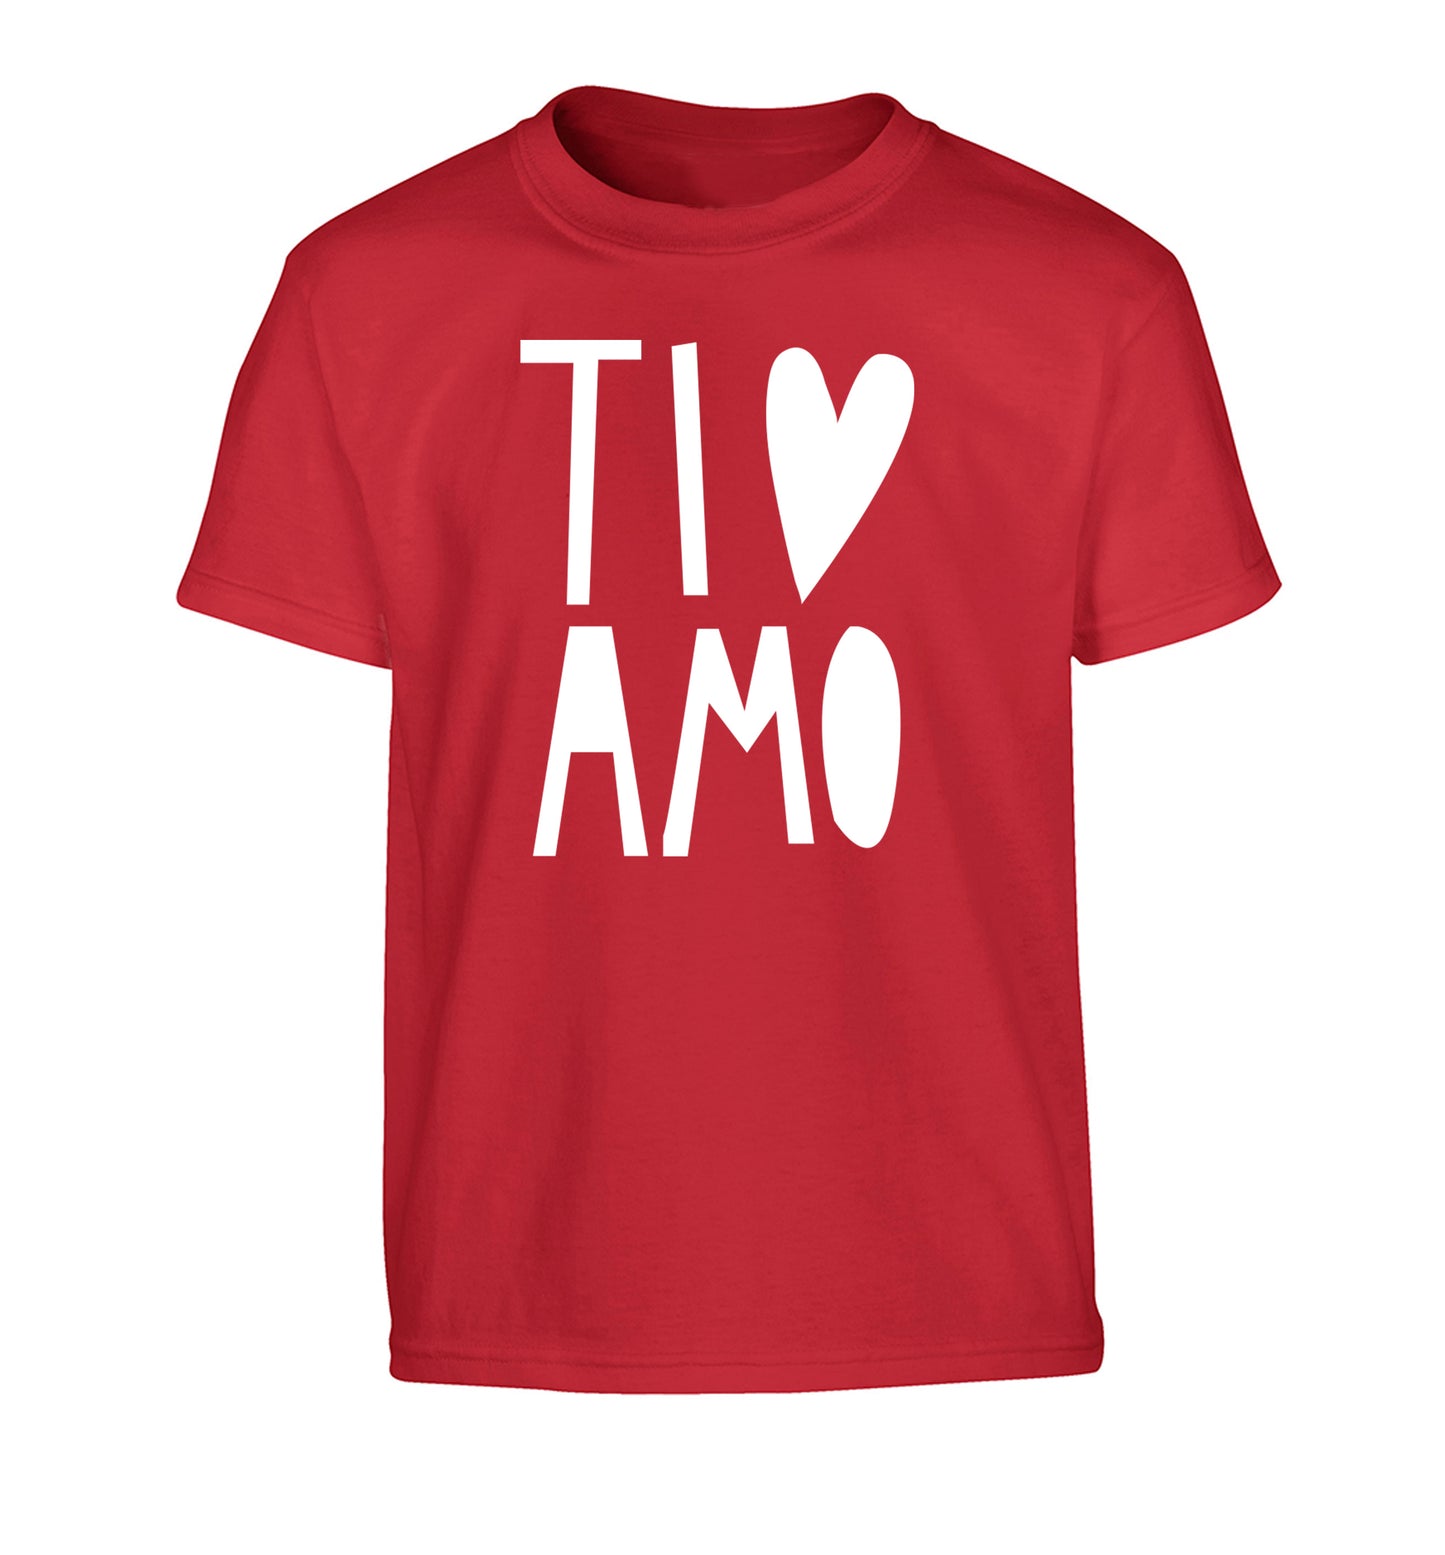 Ti amo - I love you Children's red Tshirt 12-13 Years